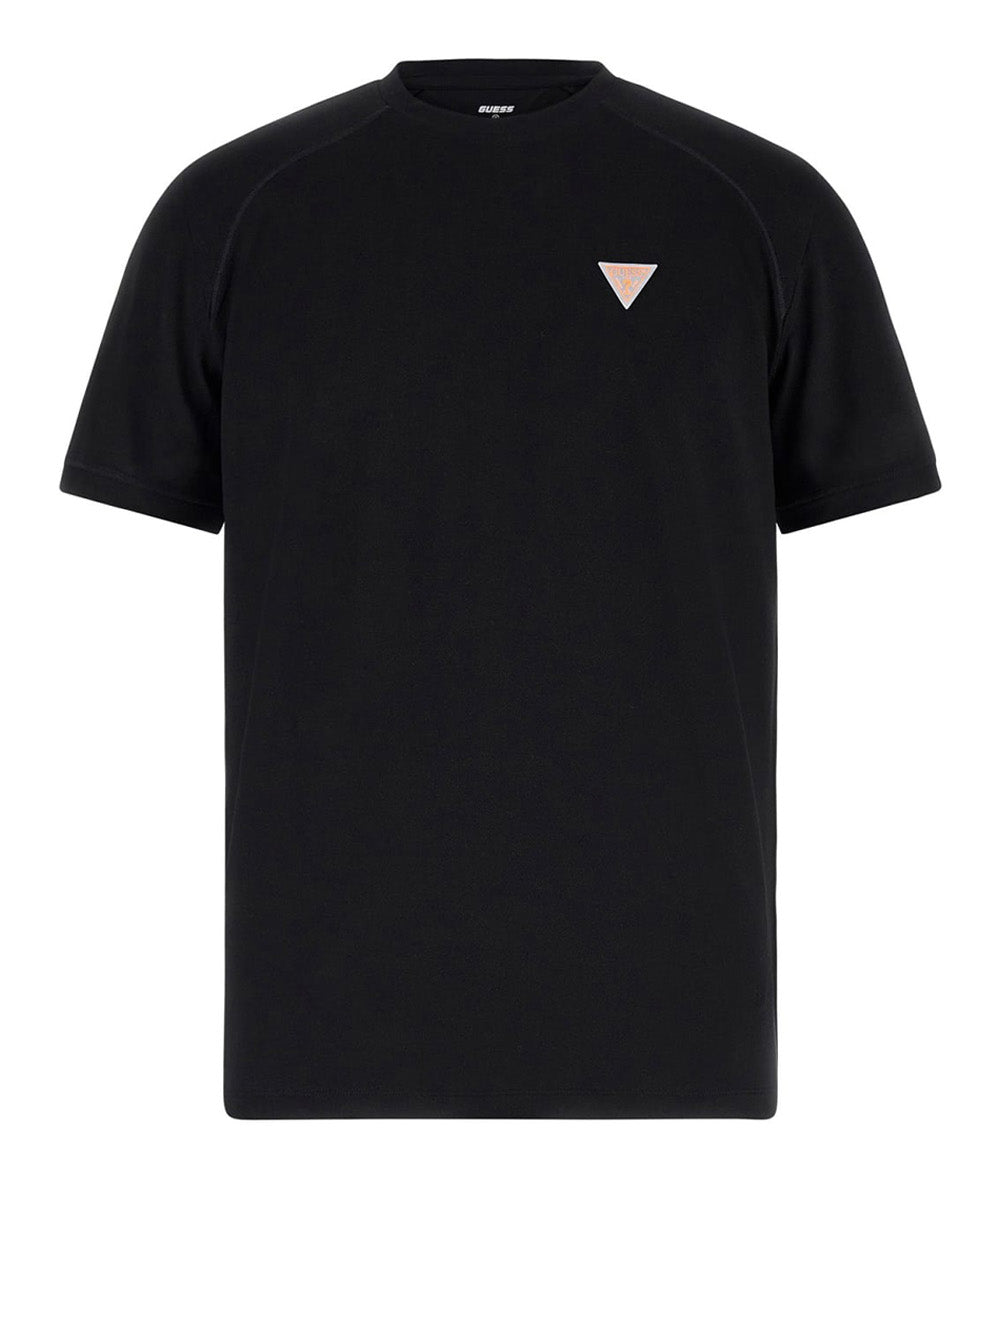 GUESS T-shirt Uomo - Nero modello Z4GI08KC582